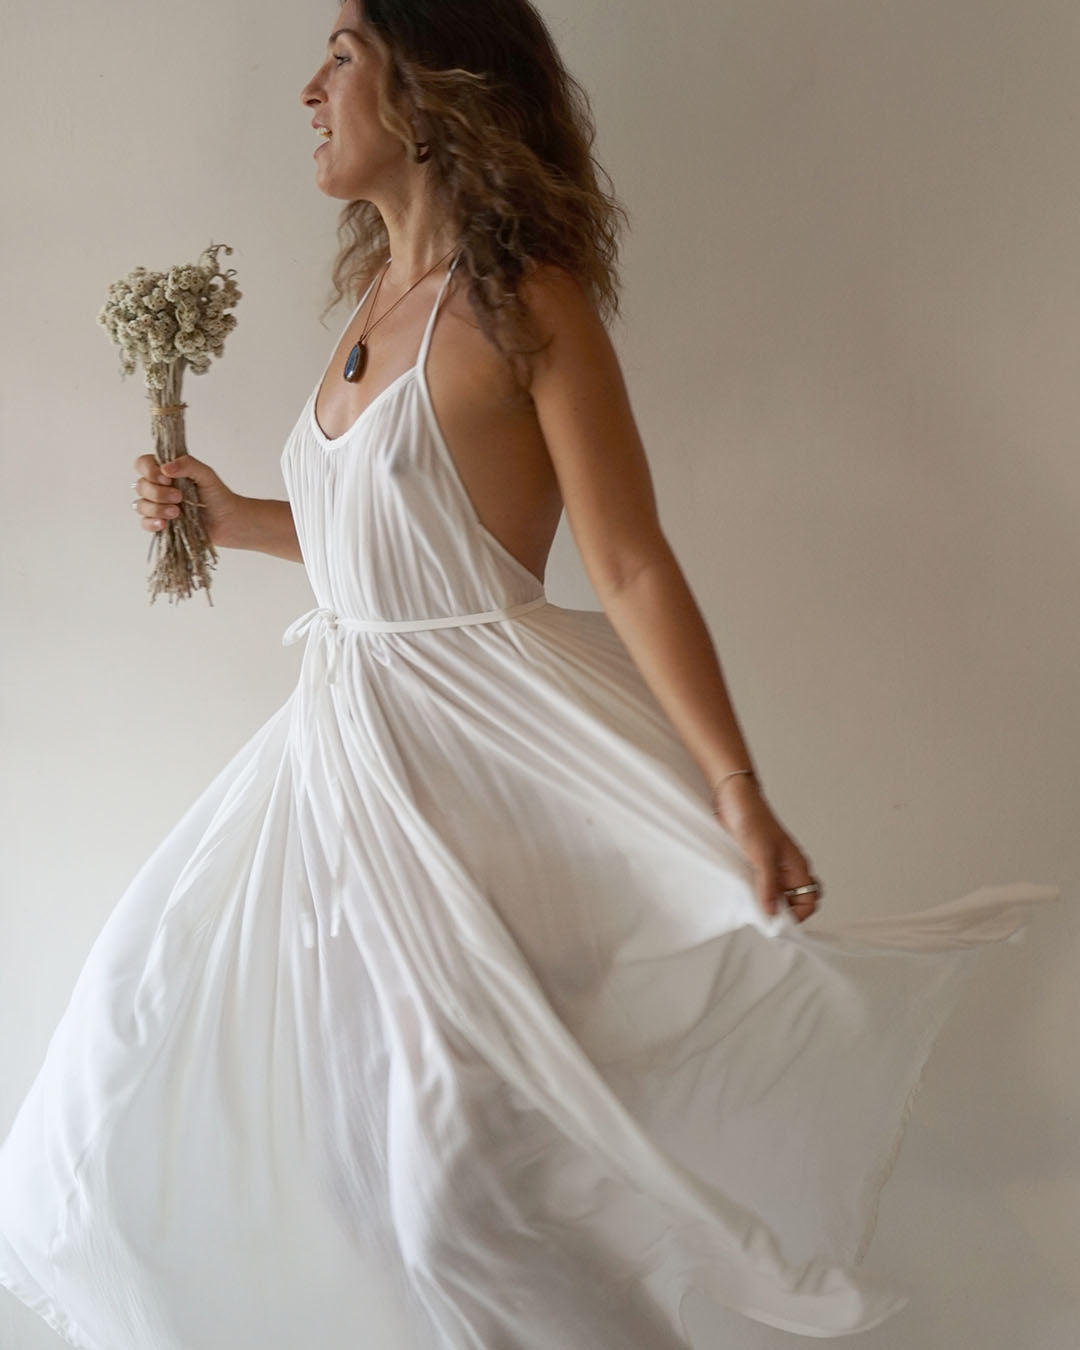 Woman wearing white coloured dress